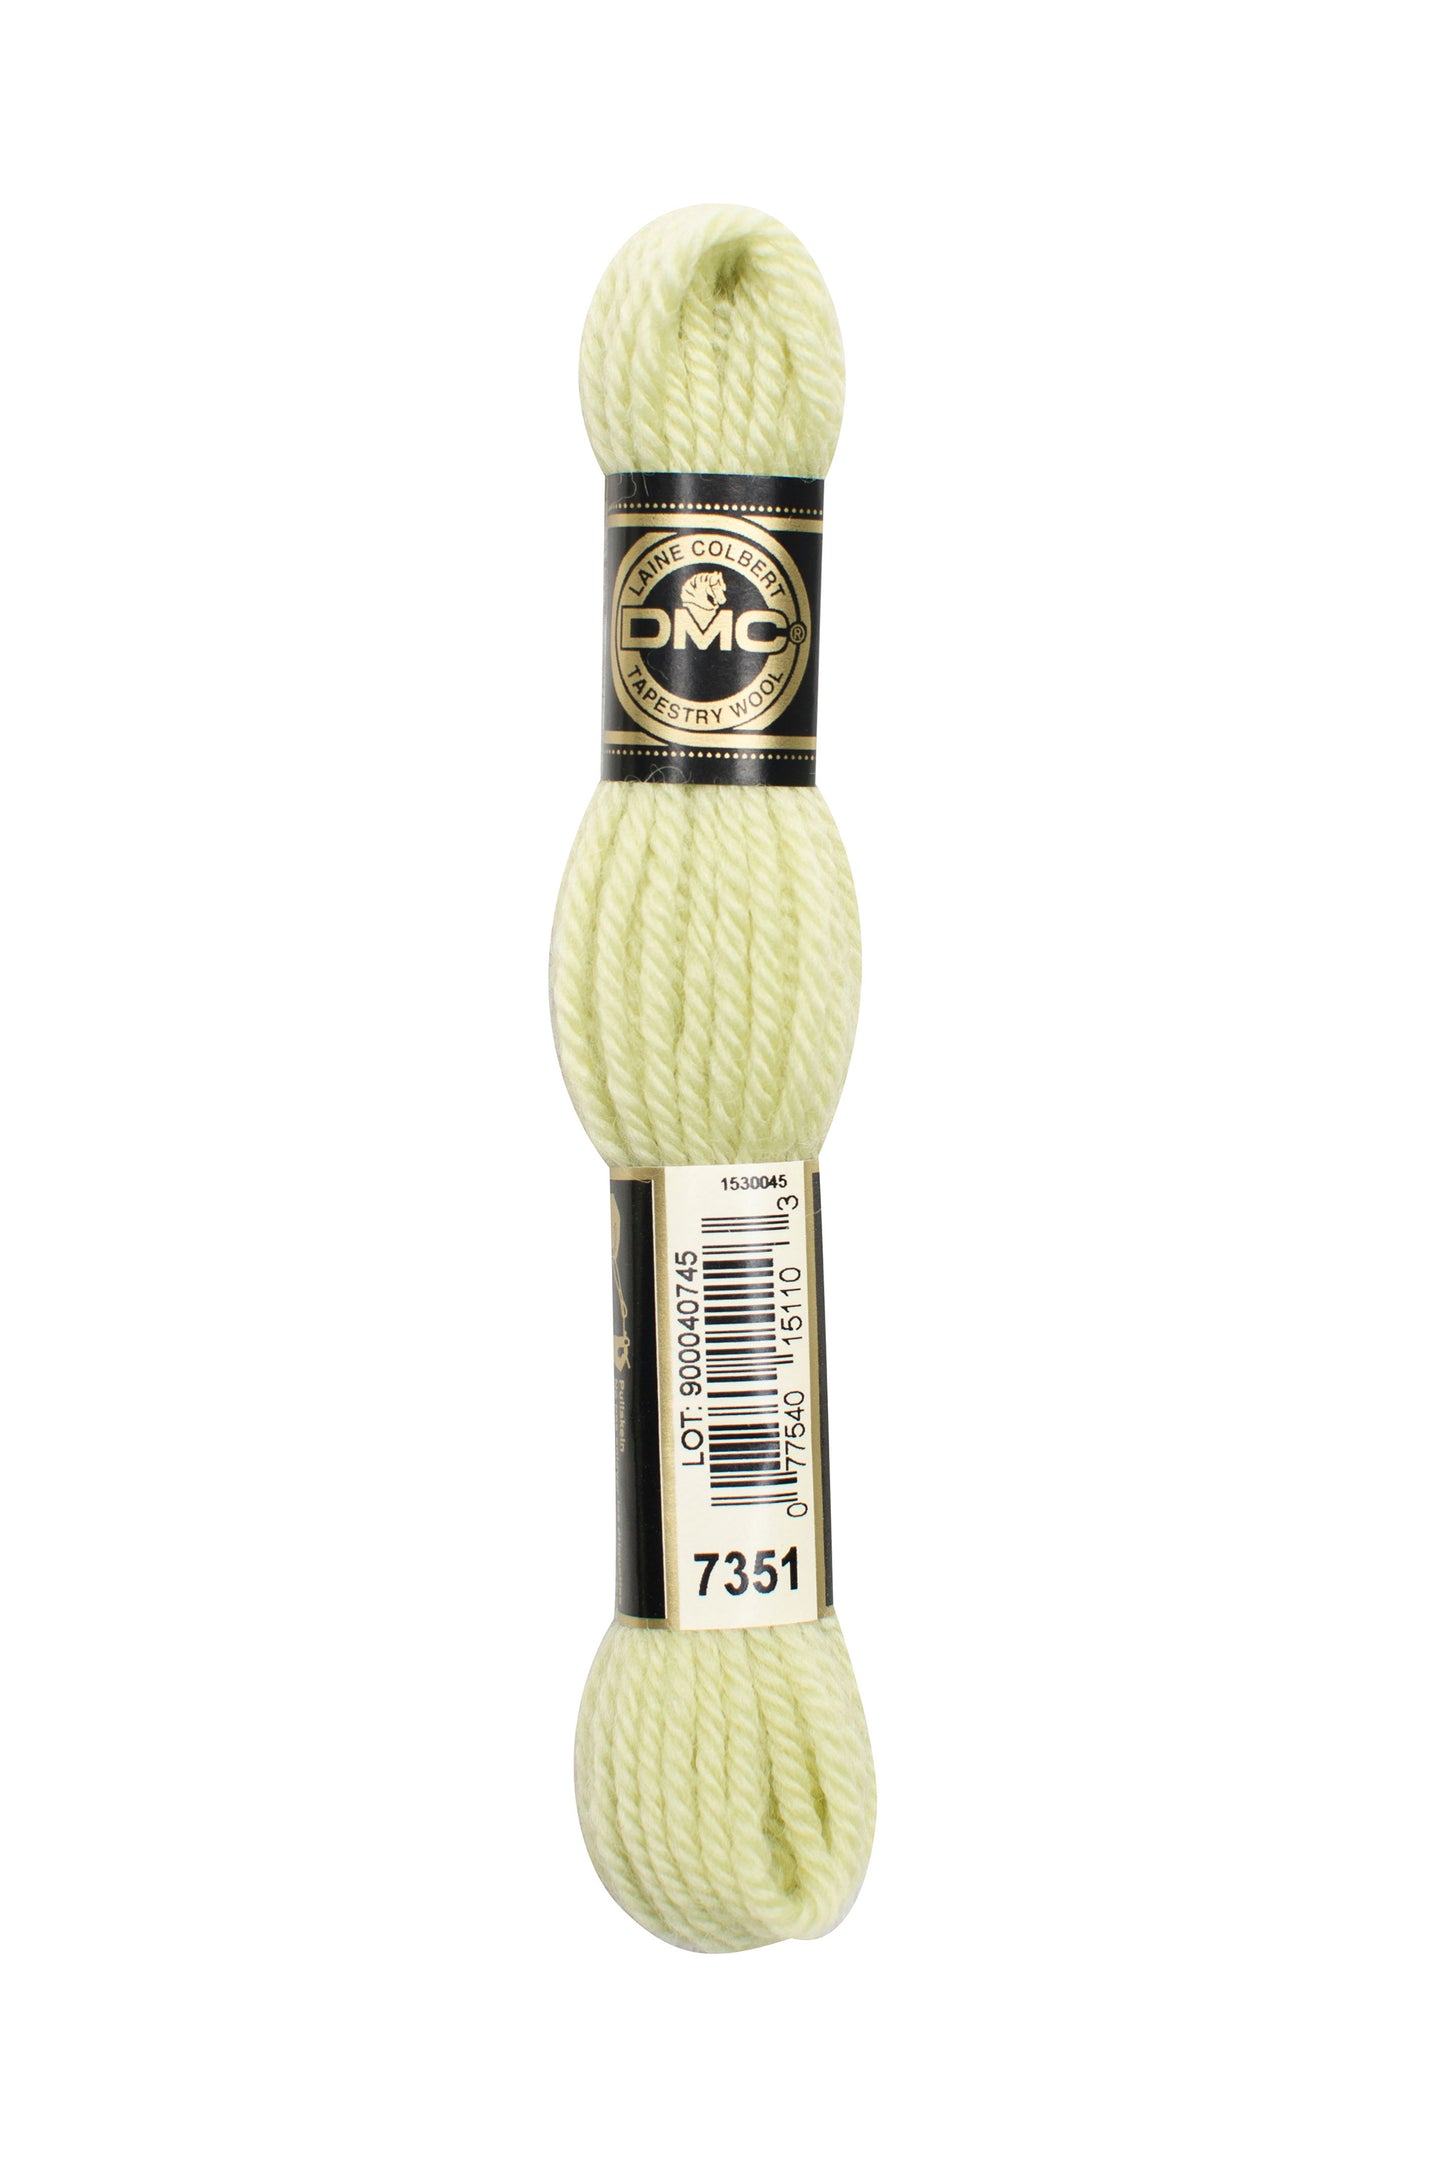 7351 – DMC Tapestry Wool